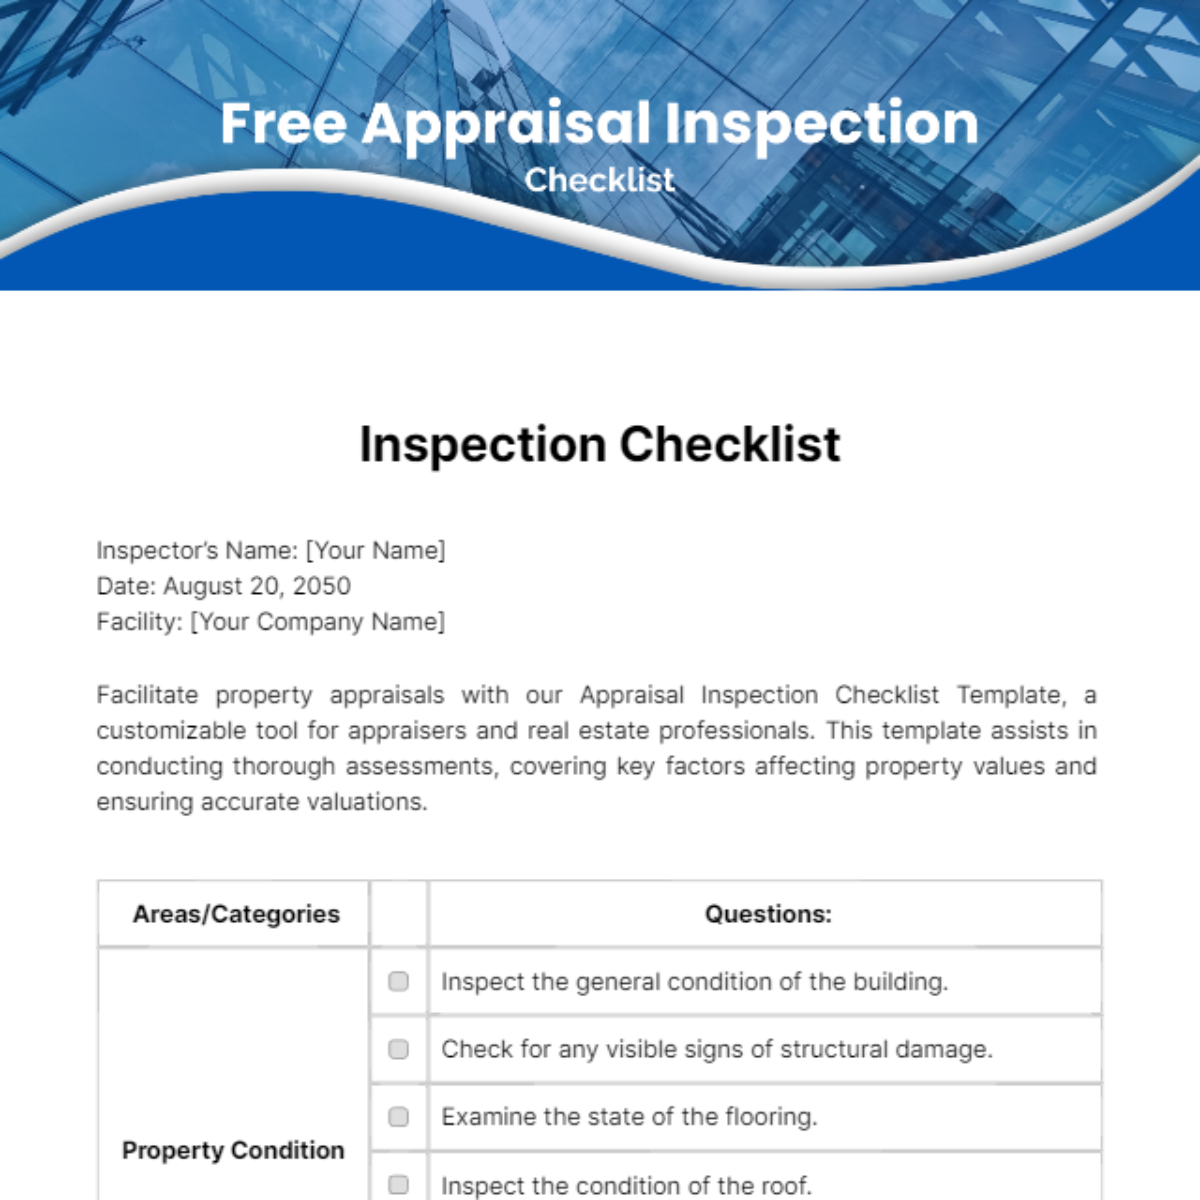 Free Appraisal Inspection Checklist Template